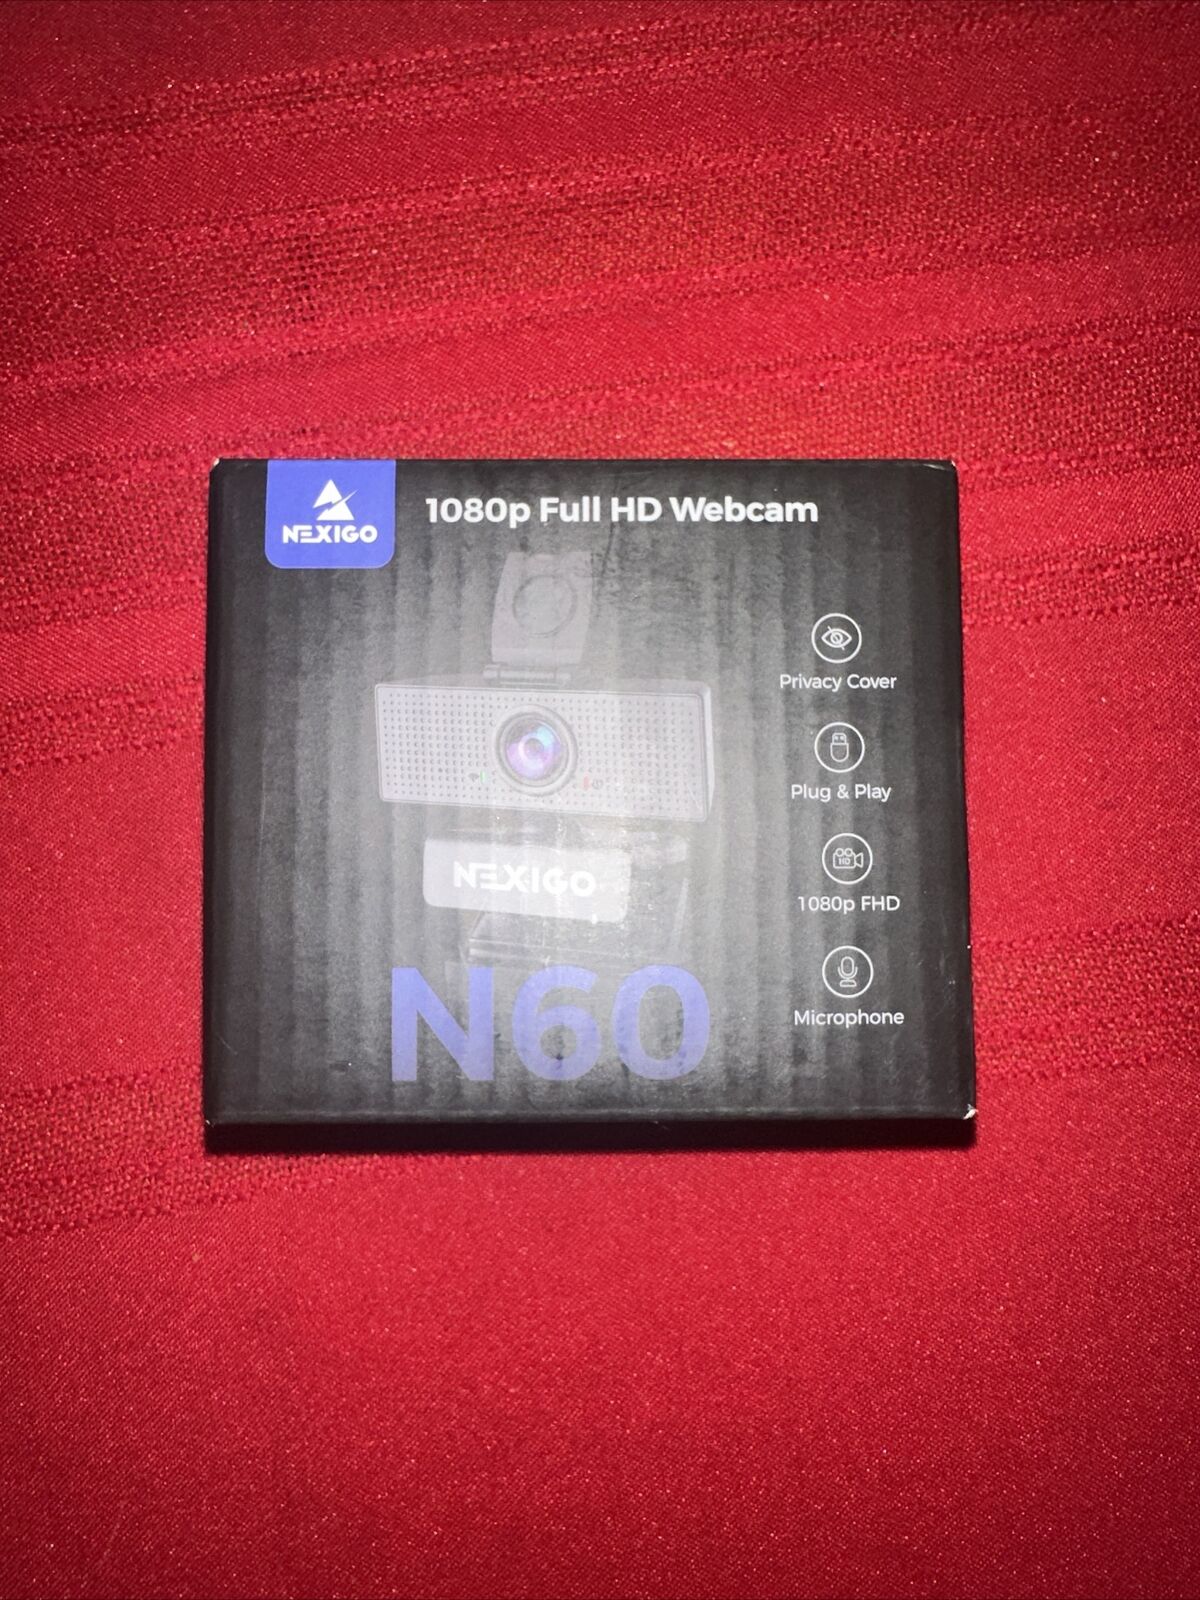 NEXIGO N60 1080P FULL HD WEBCAM NEW